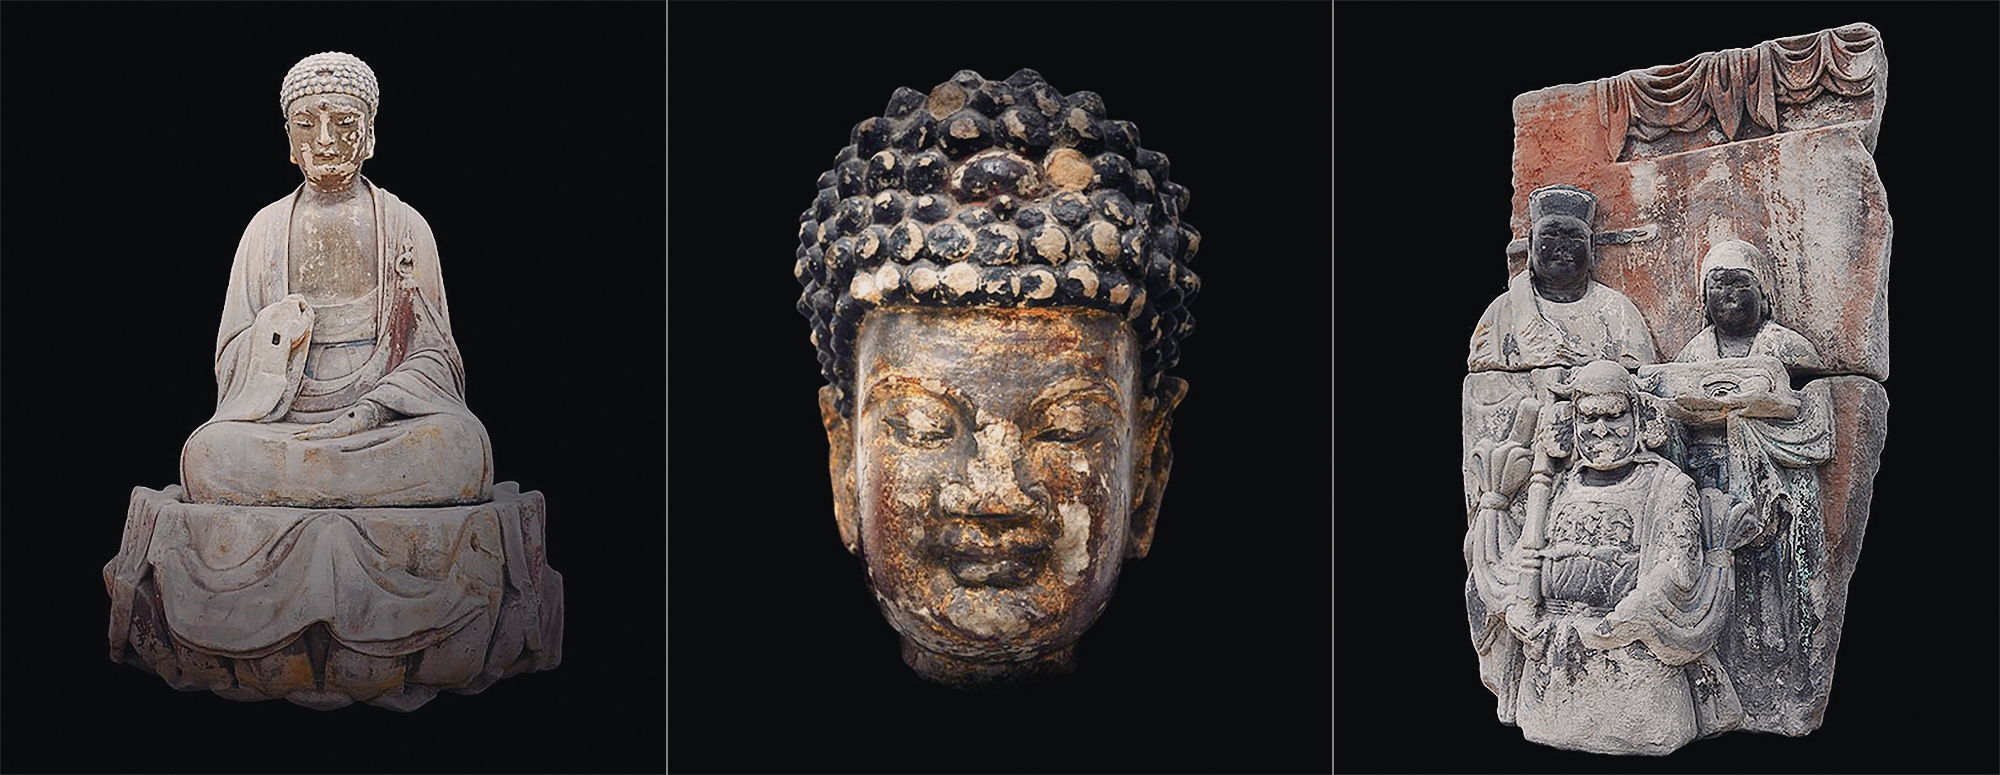 Sakyamuni Buddha Head of Sakyamuni Buddha Followers of Liu Benzun Dazu Song dynasty Rock Art Carvings Dazu China